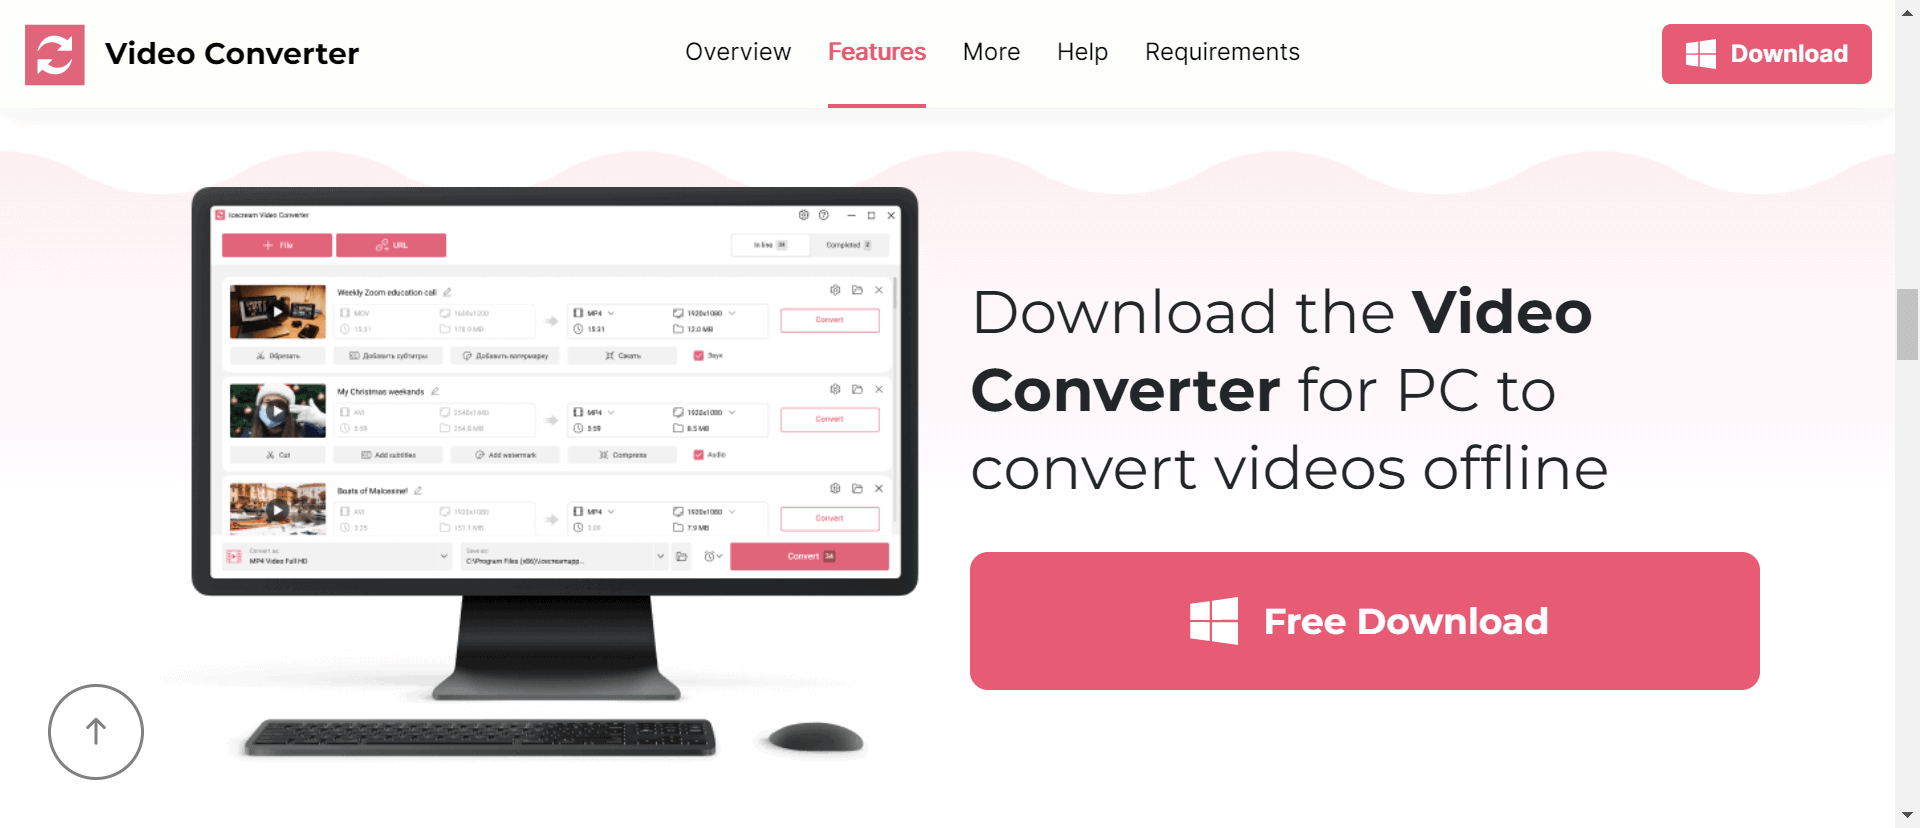 Icecream Video Converter - Best Features